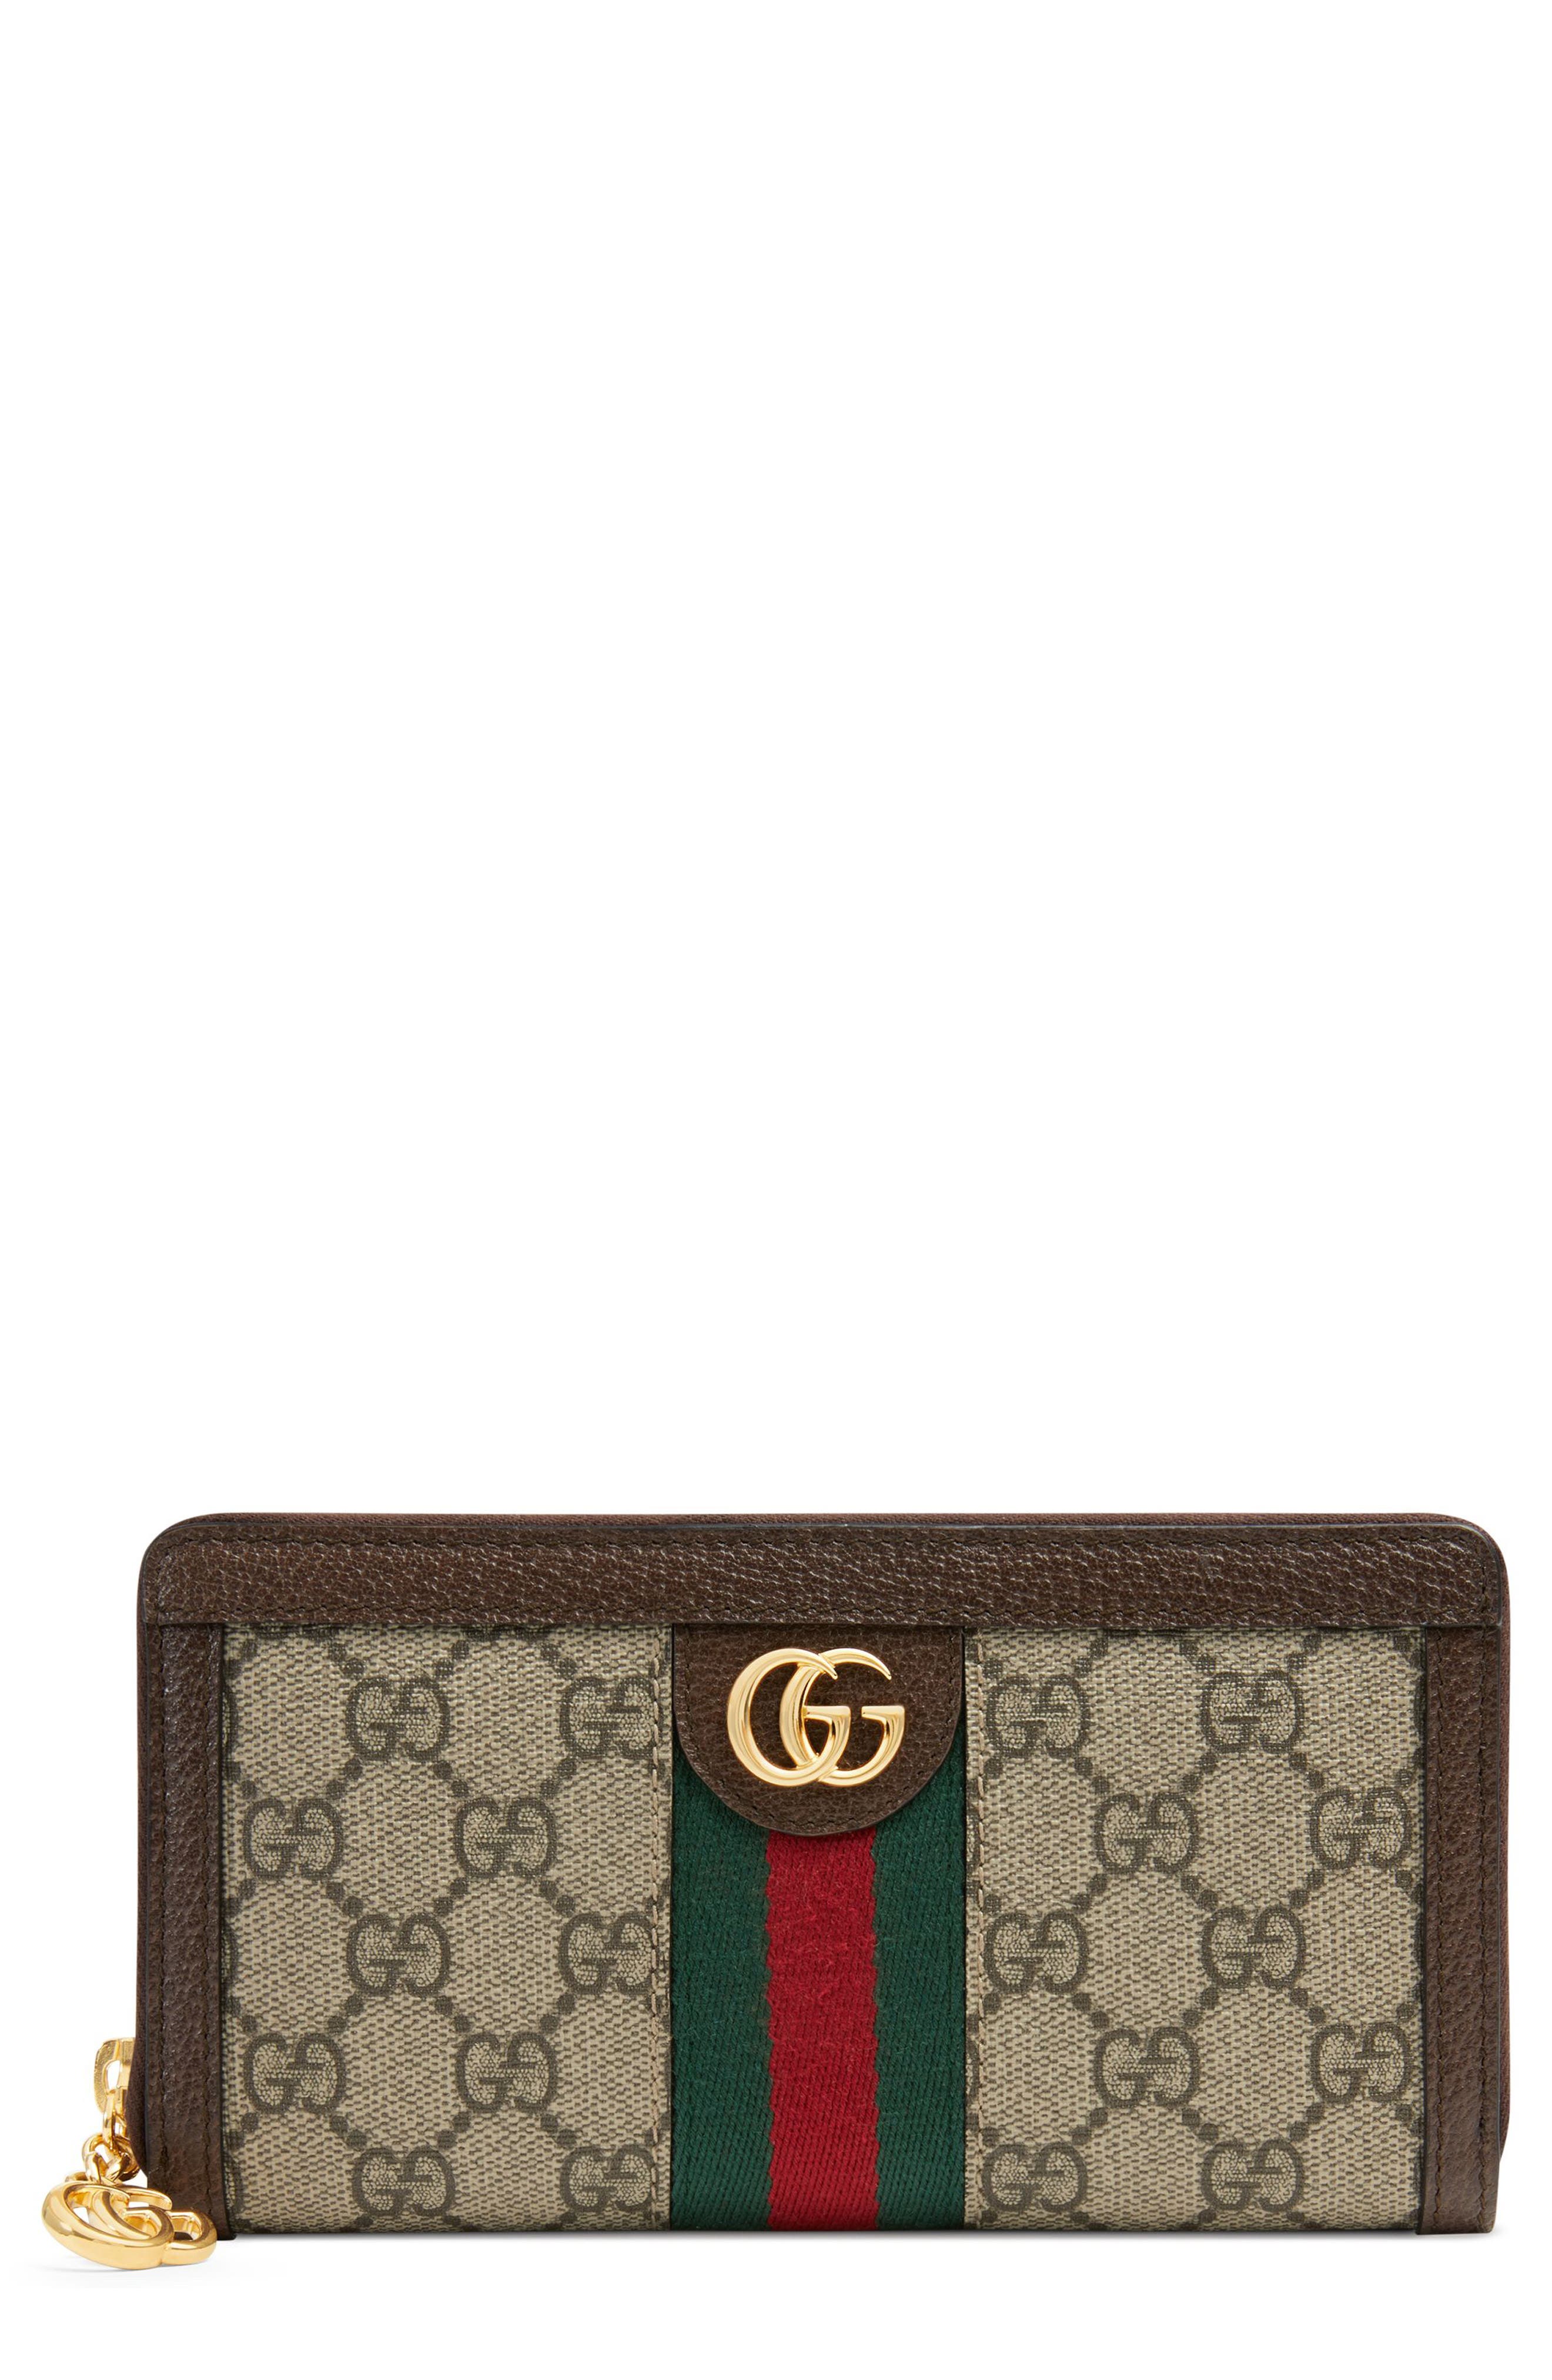 gucci women's zip around wallet